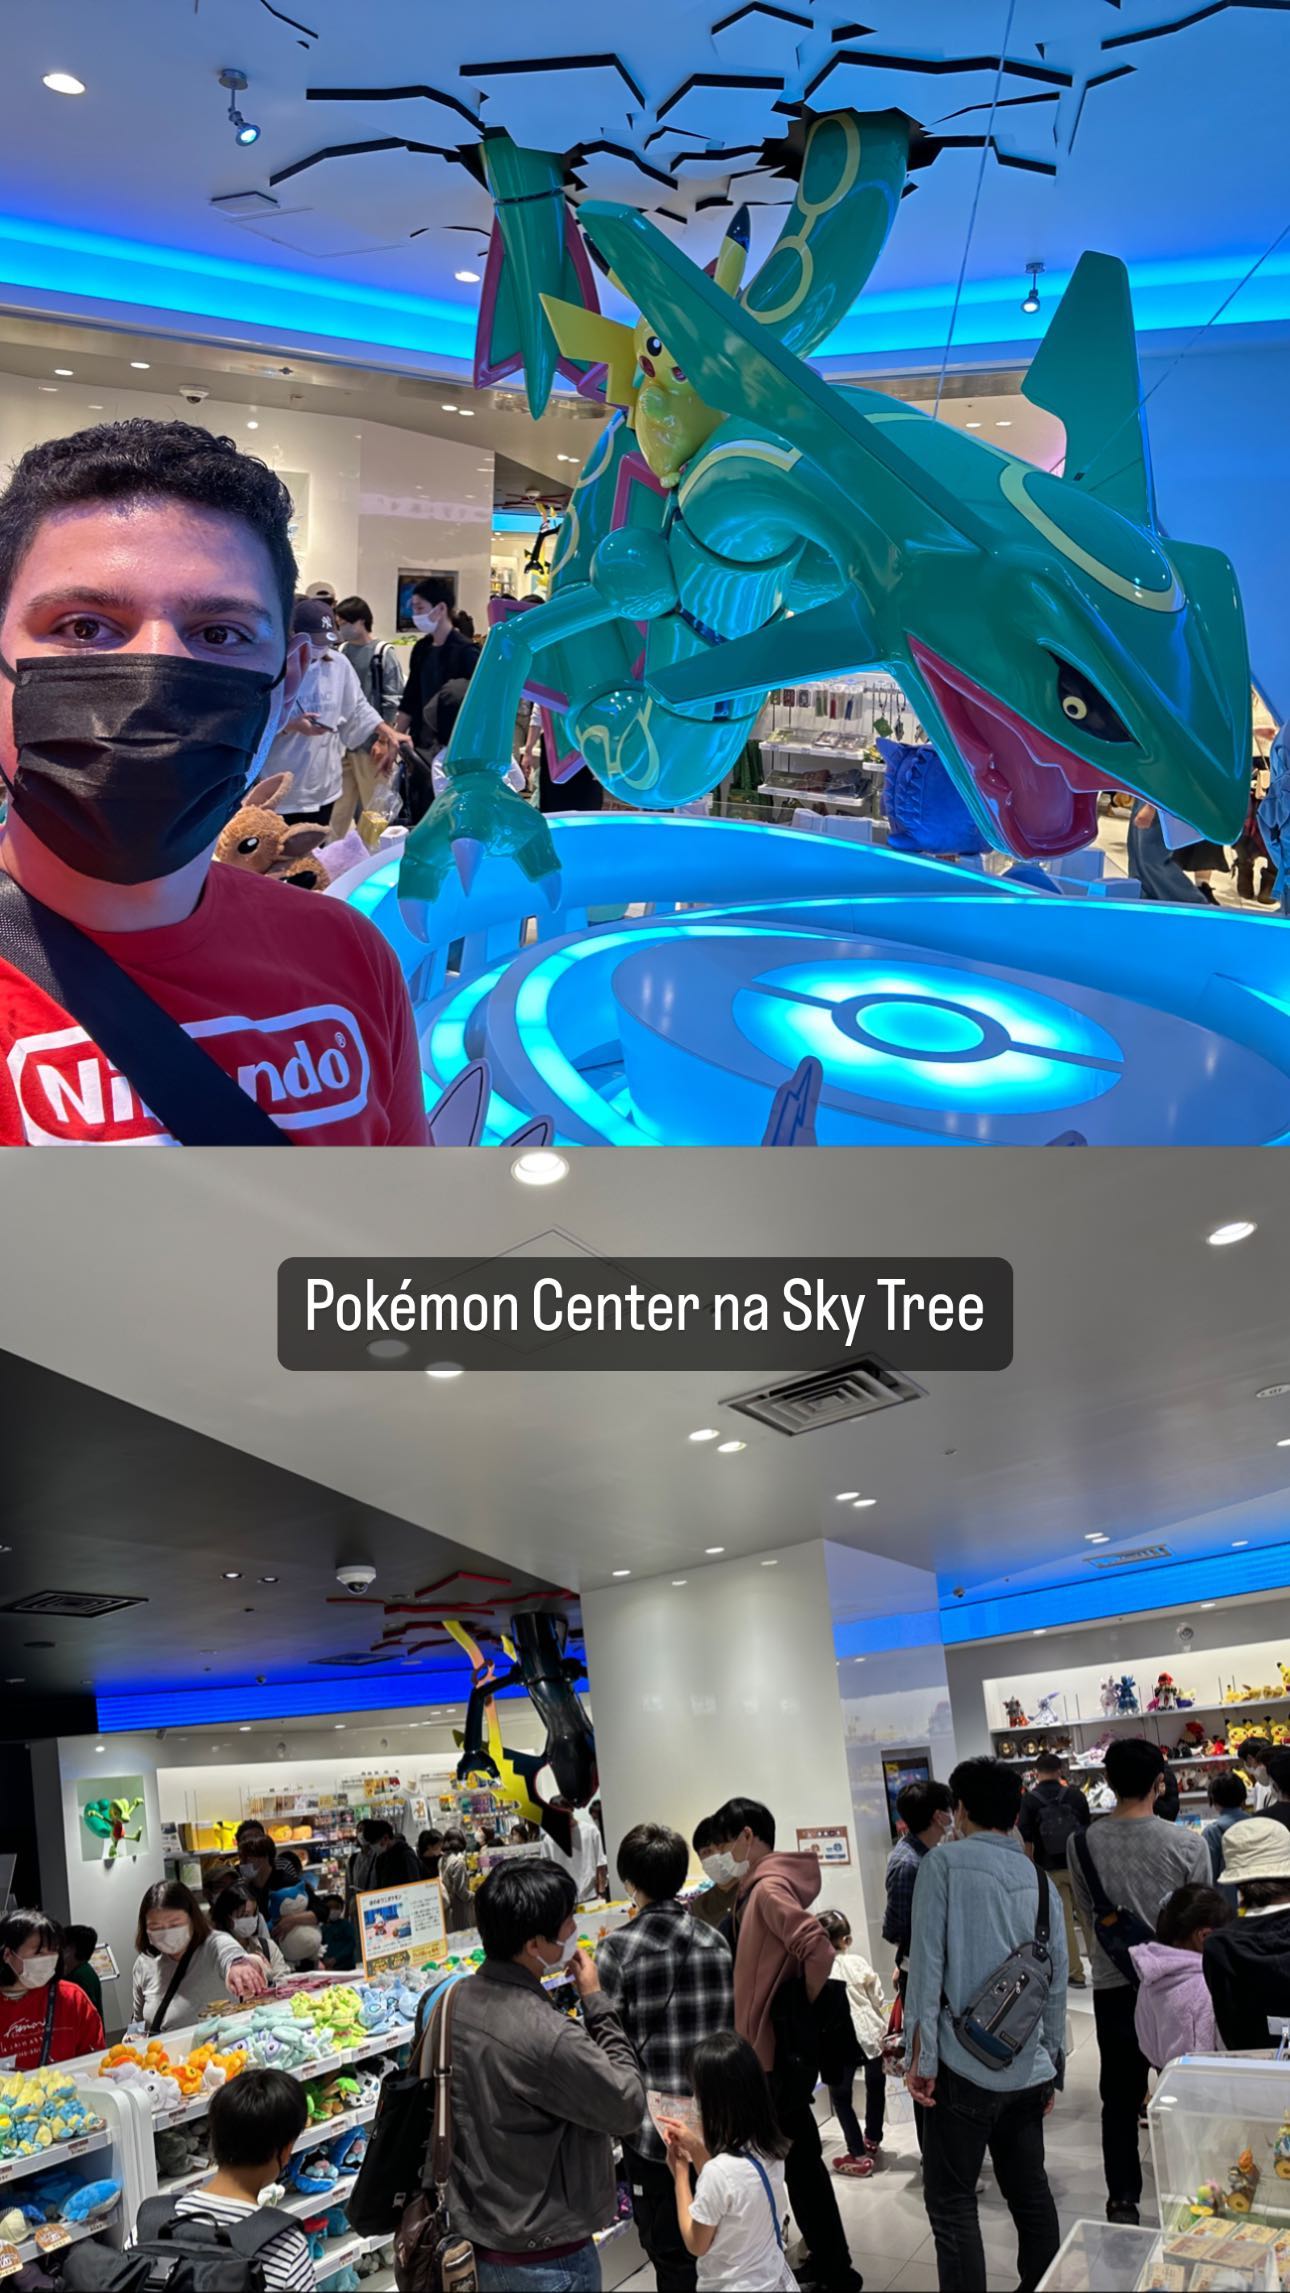 Pokémon Center at Sky Tree